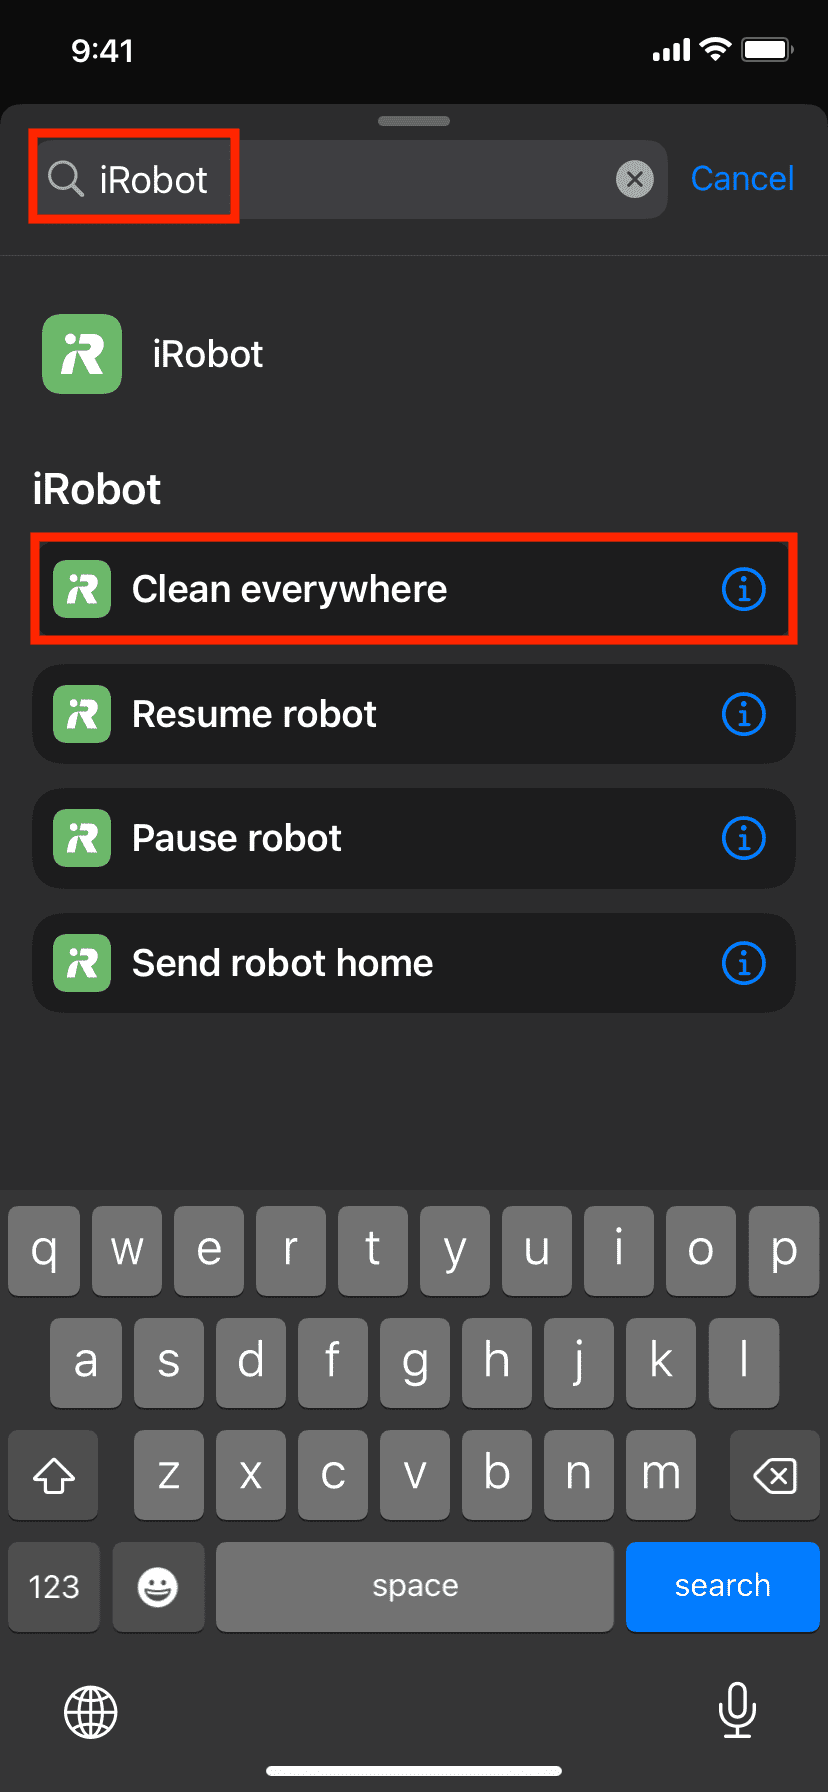 iRobot shortcut actions